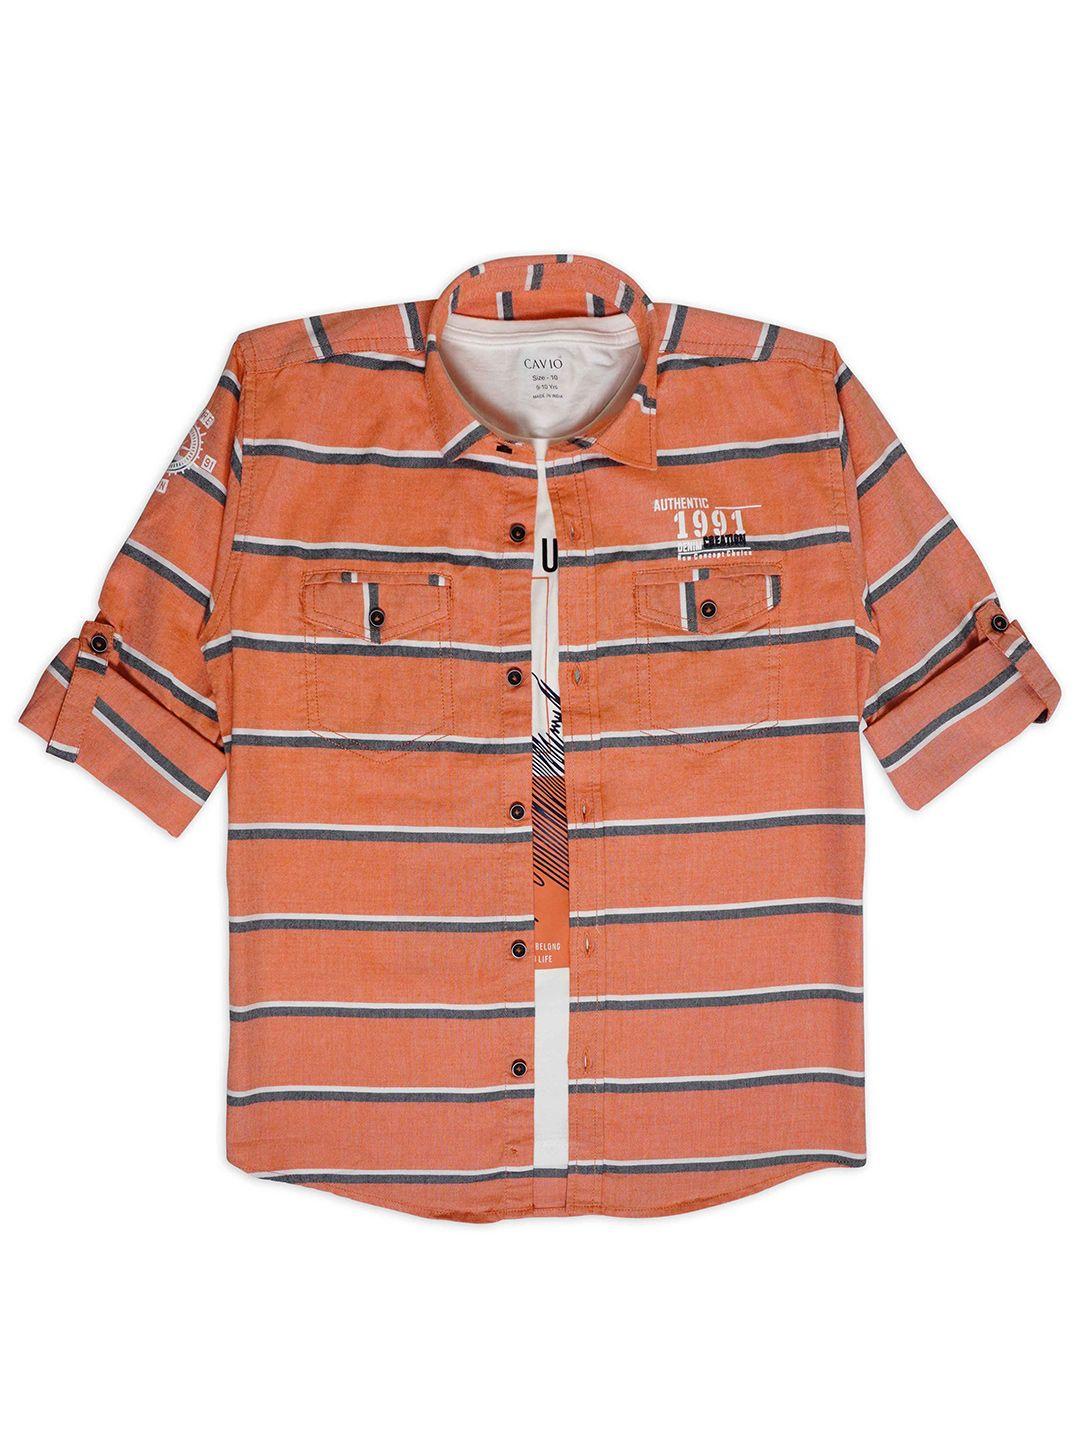 cavio boys comfort horizontal striped pure cotton casual shirt with t-shirt